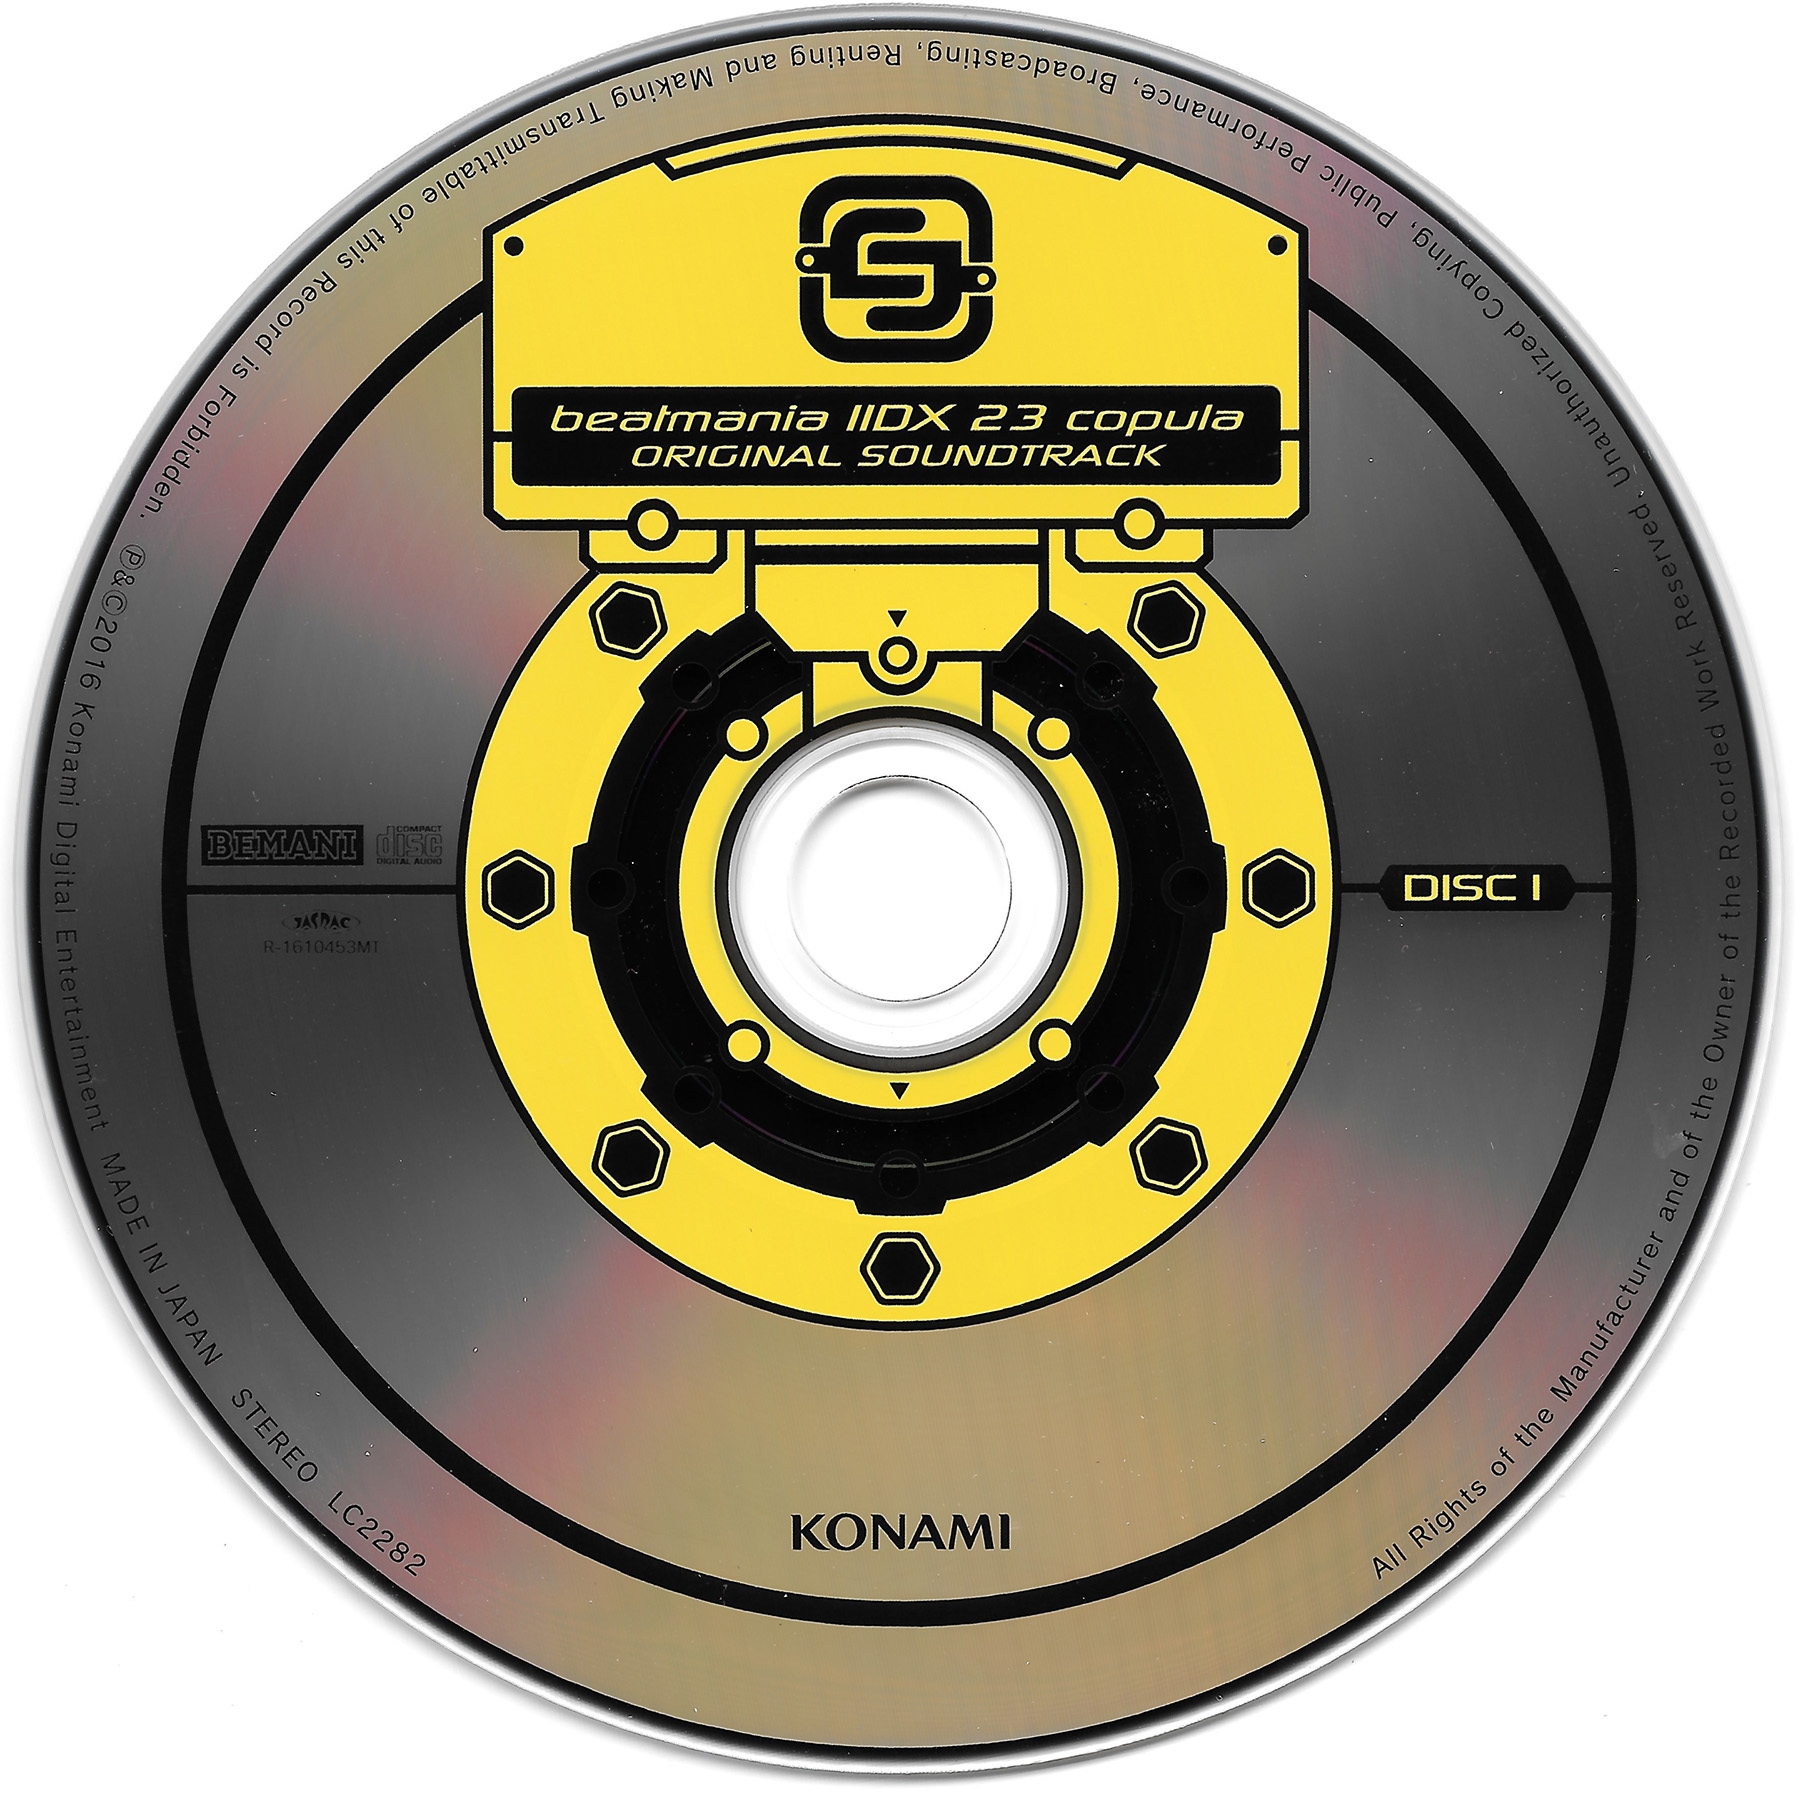 beatmania IIDX 23 copula ORIGINAL SOUNDTRACK (2016) MP3 - Download beatmania  IIDX 23 copula ORIGINAL SOUNDTRACK (2016) Soundtracks for FREE!